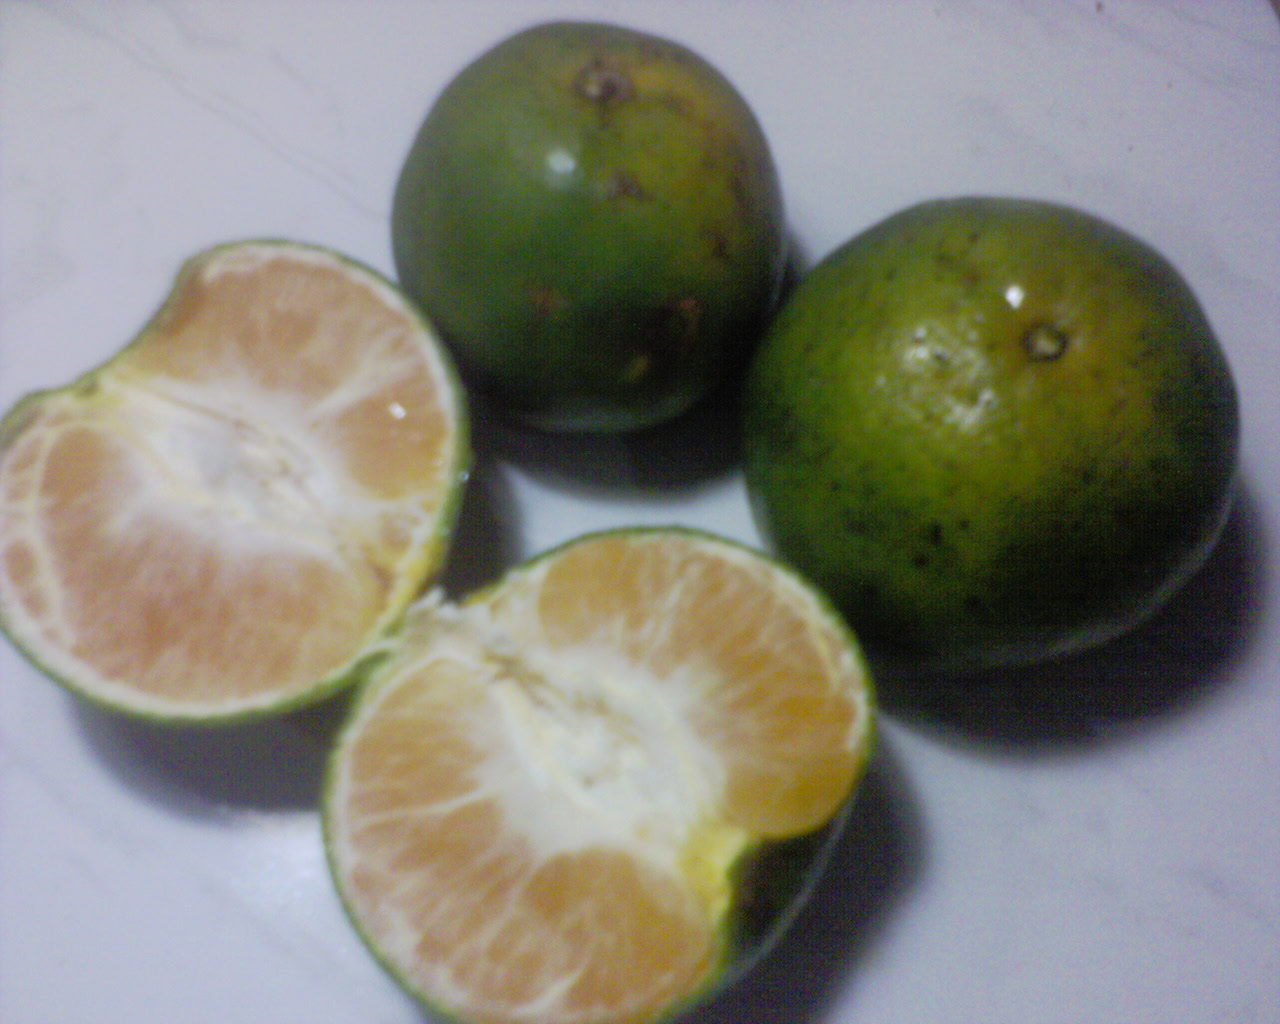  Gambar 3 Gambar batang buah limau jeruk komering 